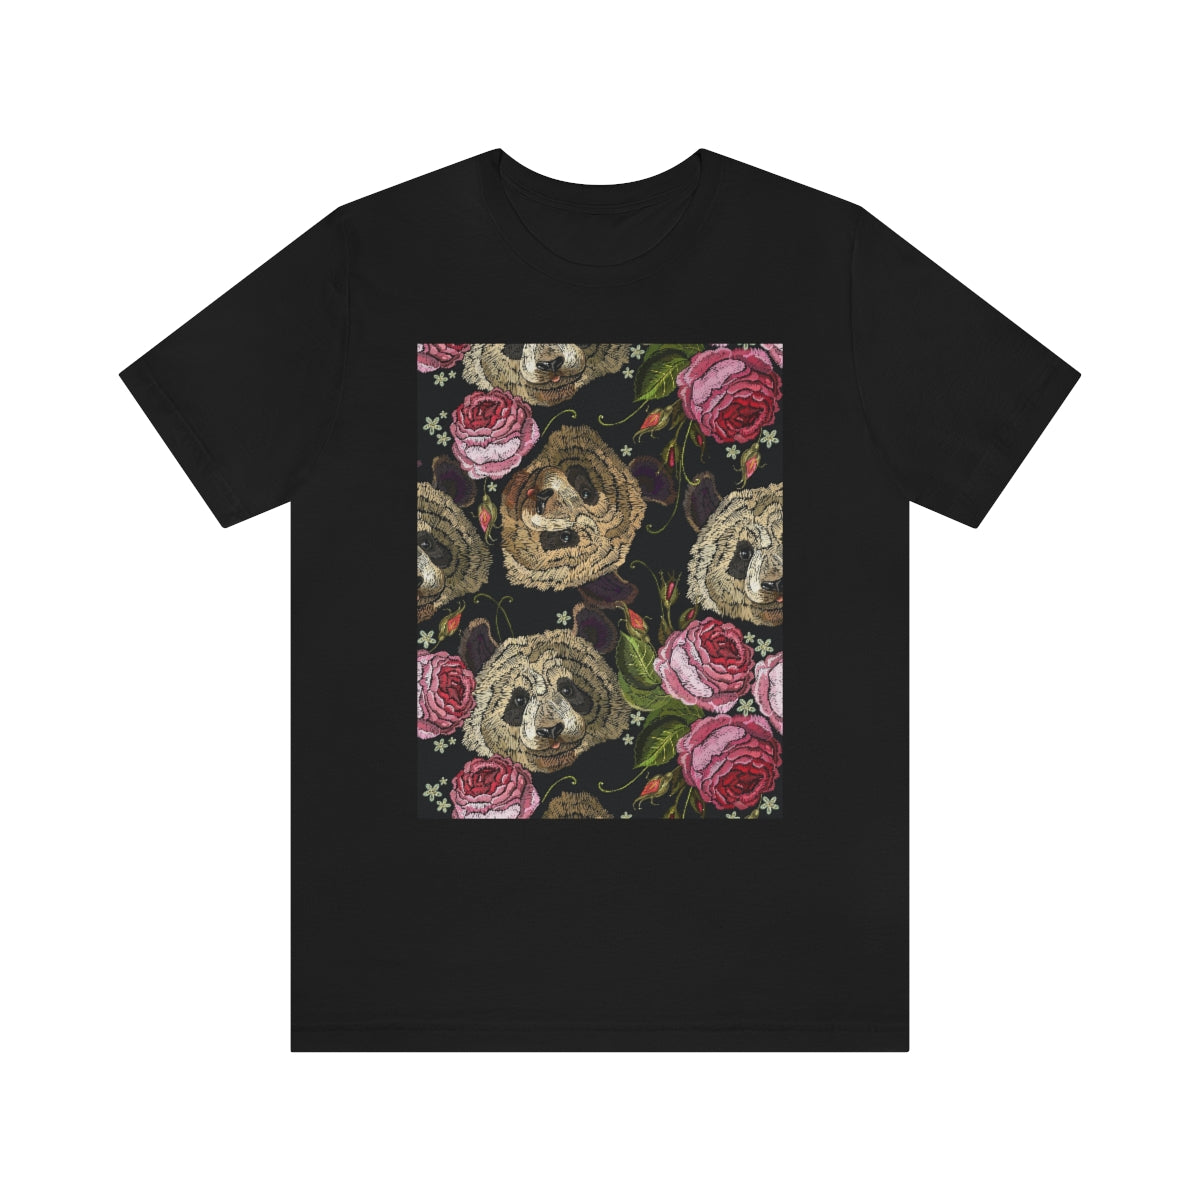 Unisex Jersey Short Sleeve Tee "Panda & flowers"